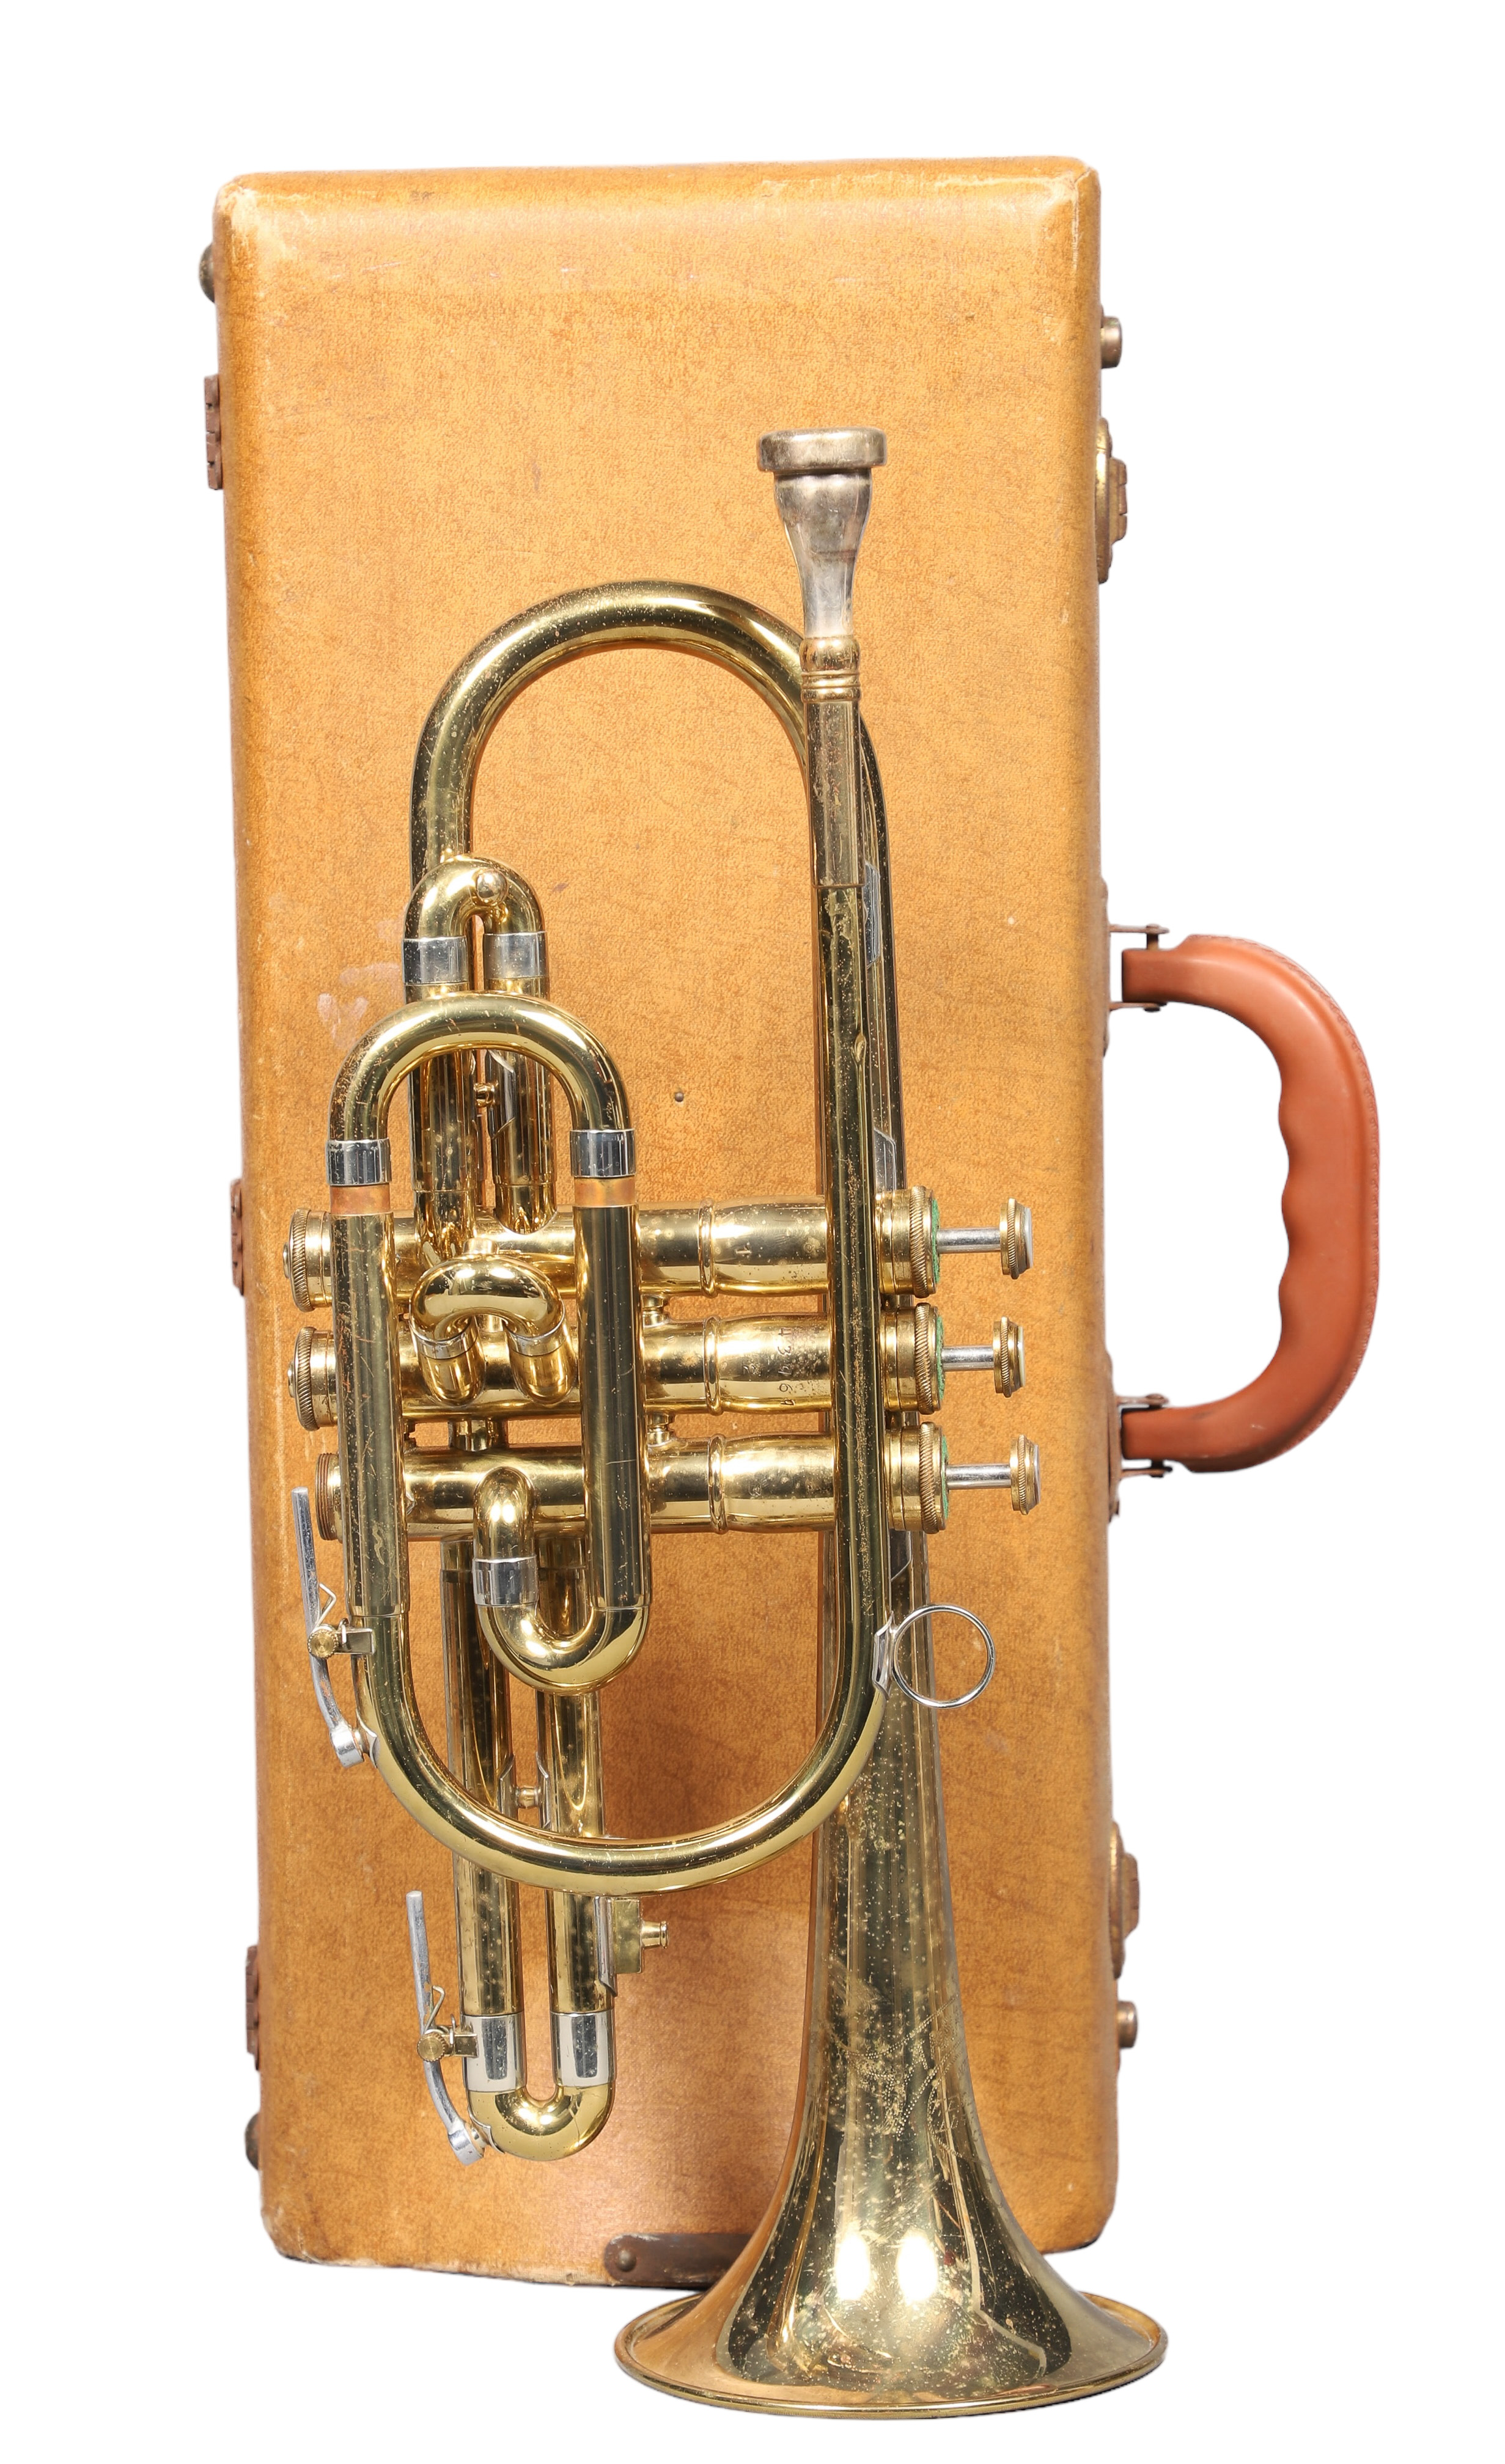 Olds Ambassador cornet trumpet,